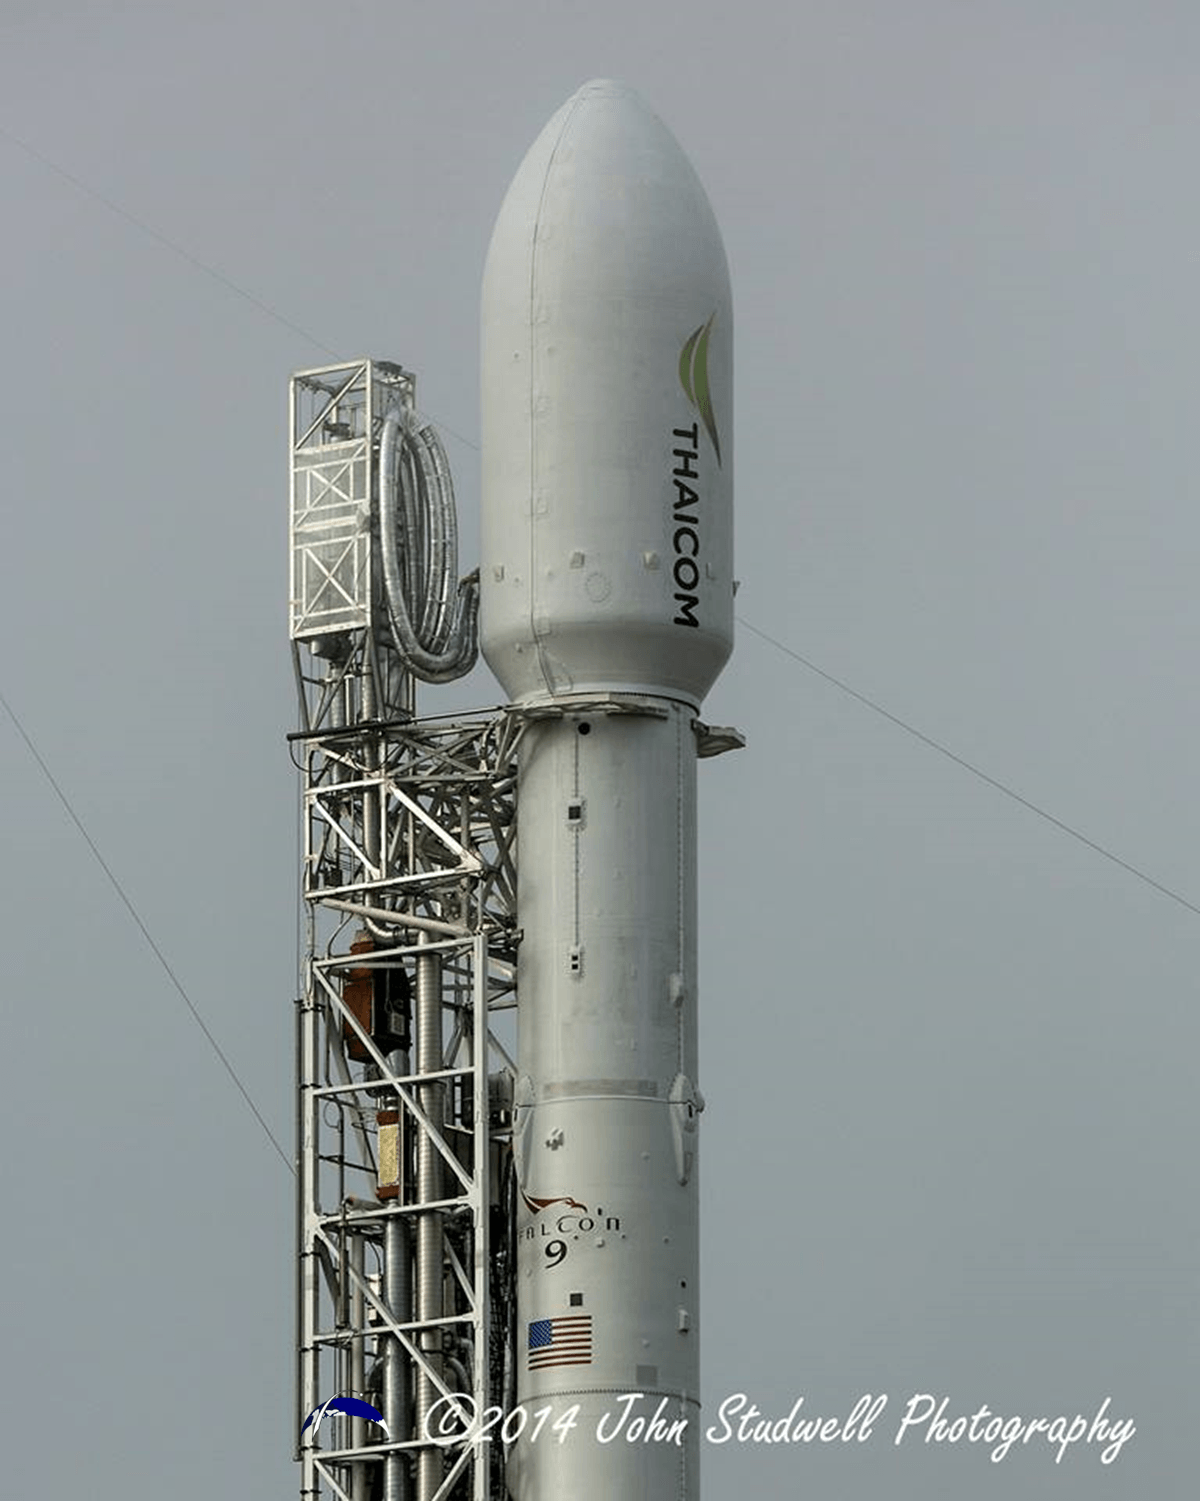 Falcon 9 Rocket Logo - Thaicom logo on fairing of Falcon 9 v1.1 rocket at Cape Canaveral